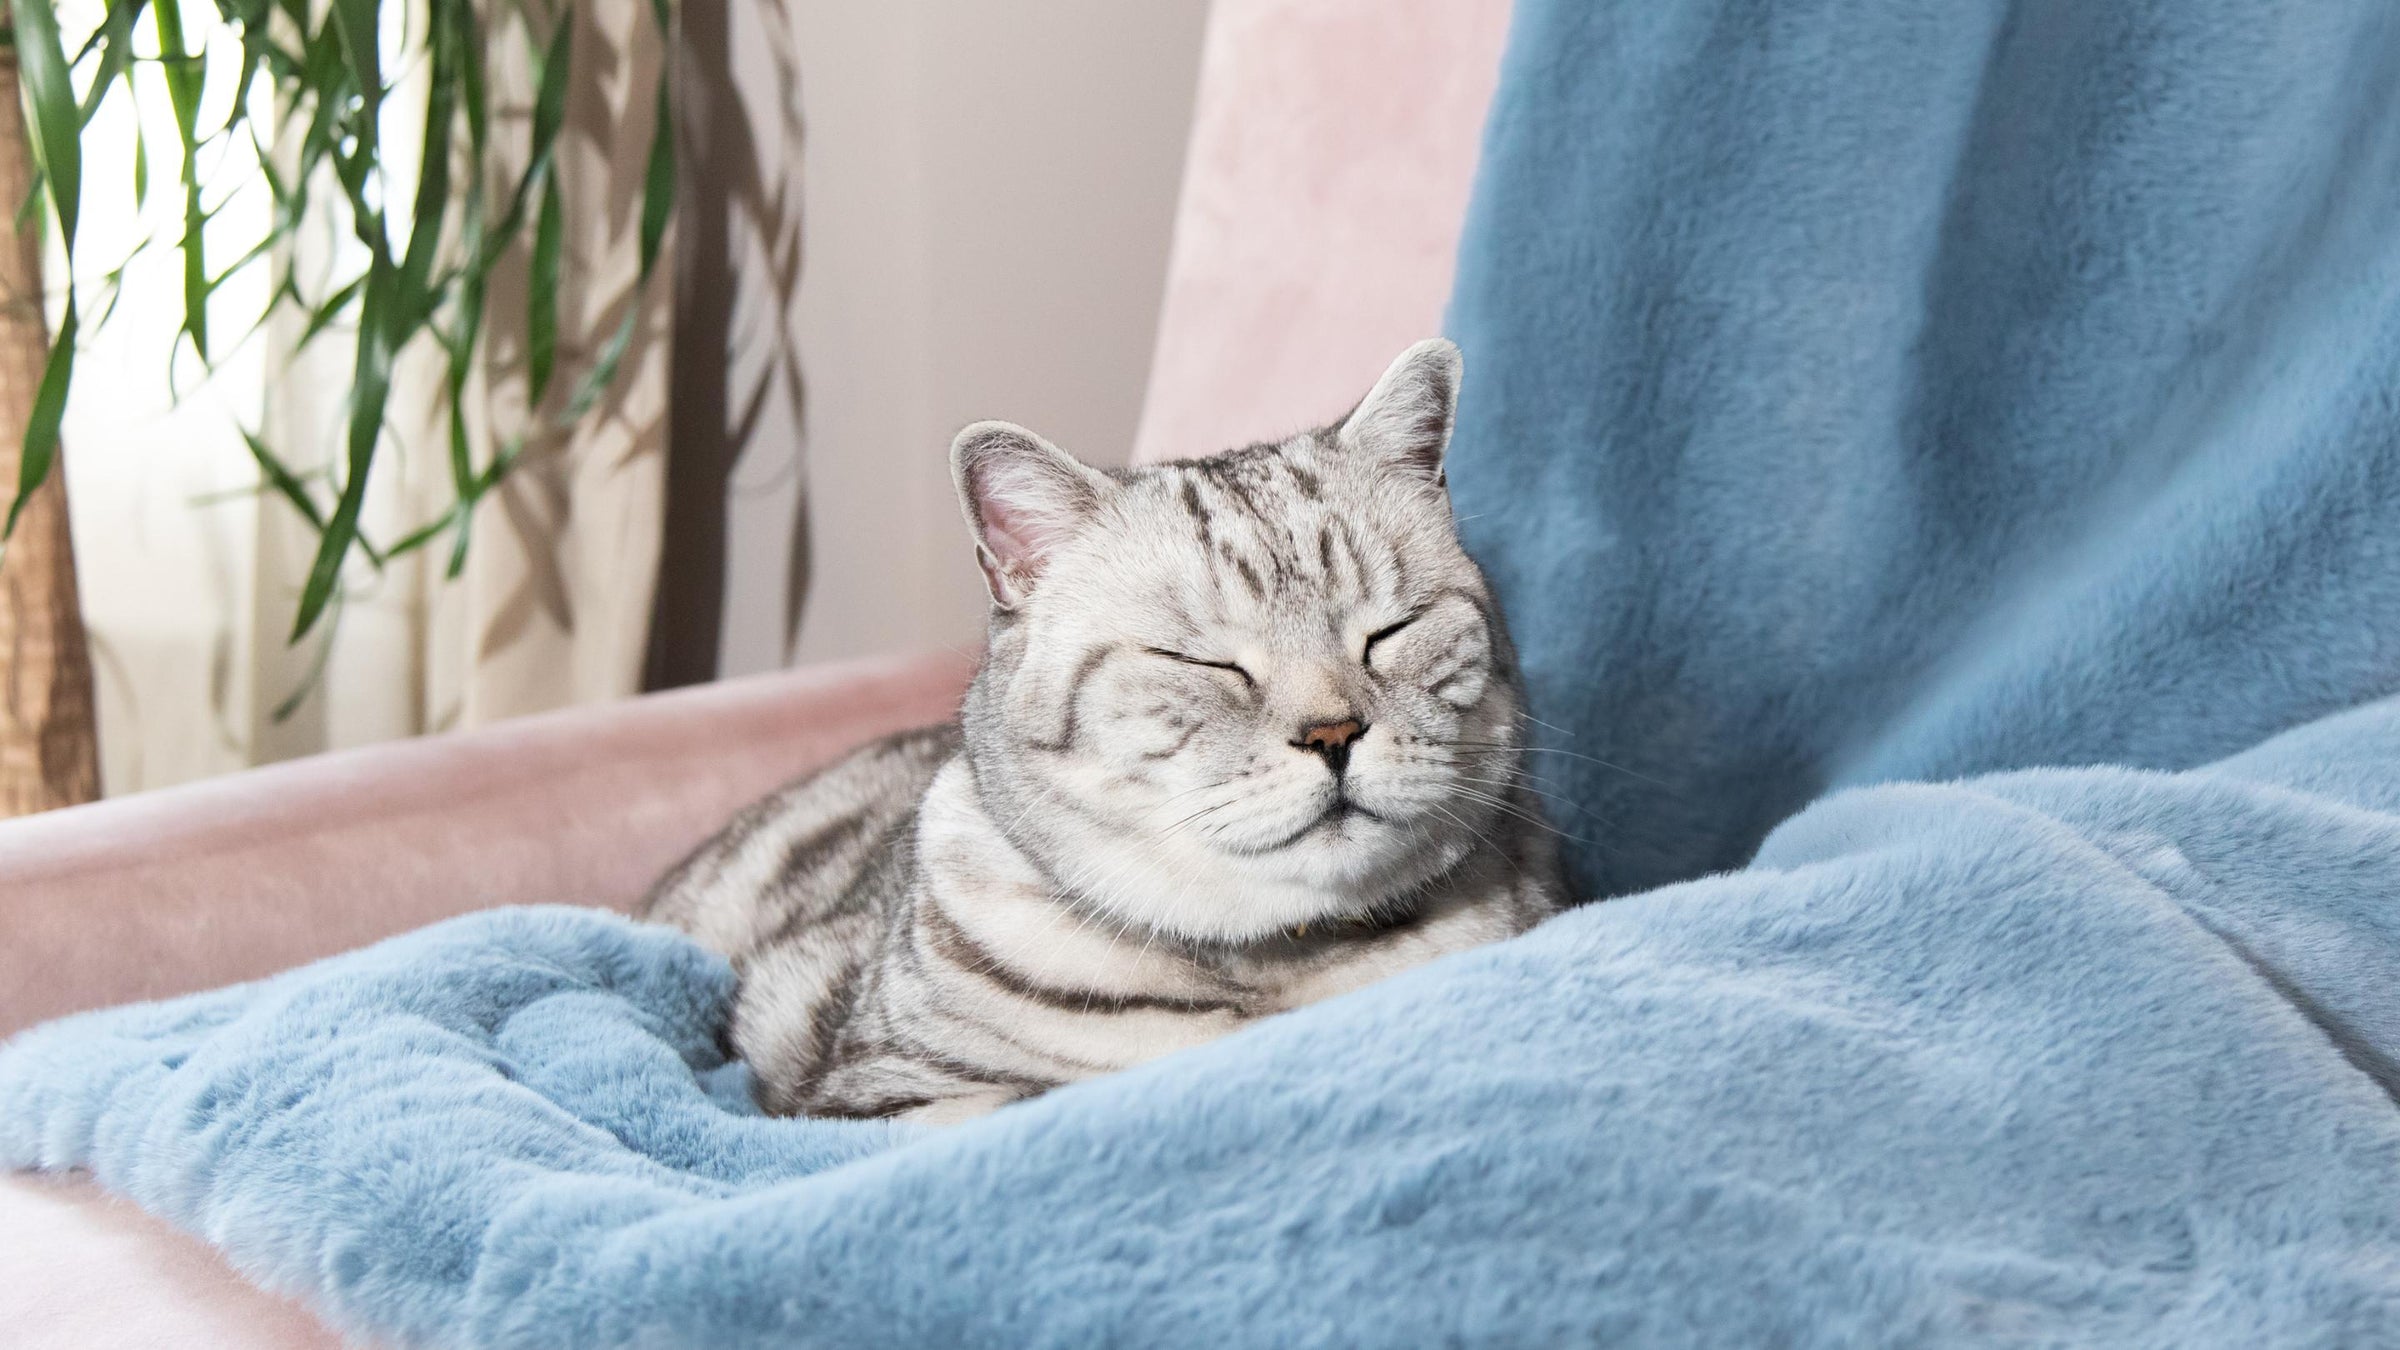 Cat Sleeping on furry blue blanket